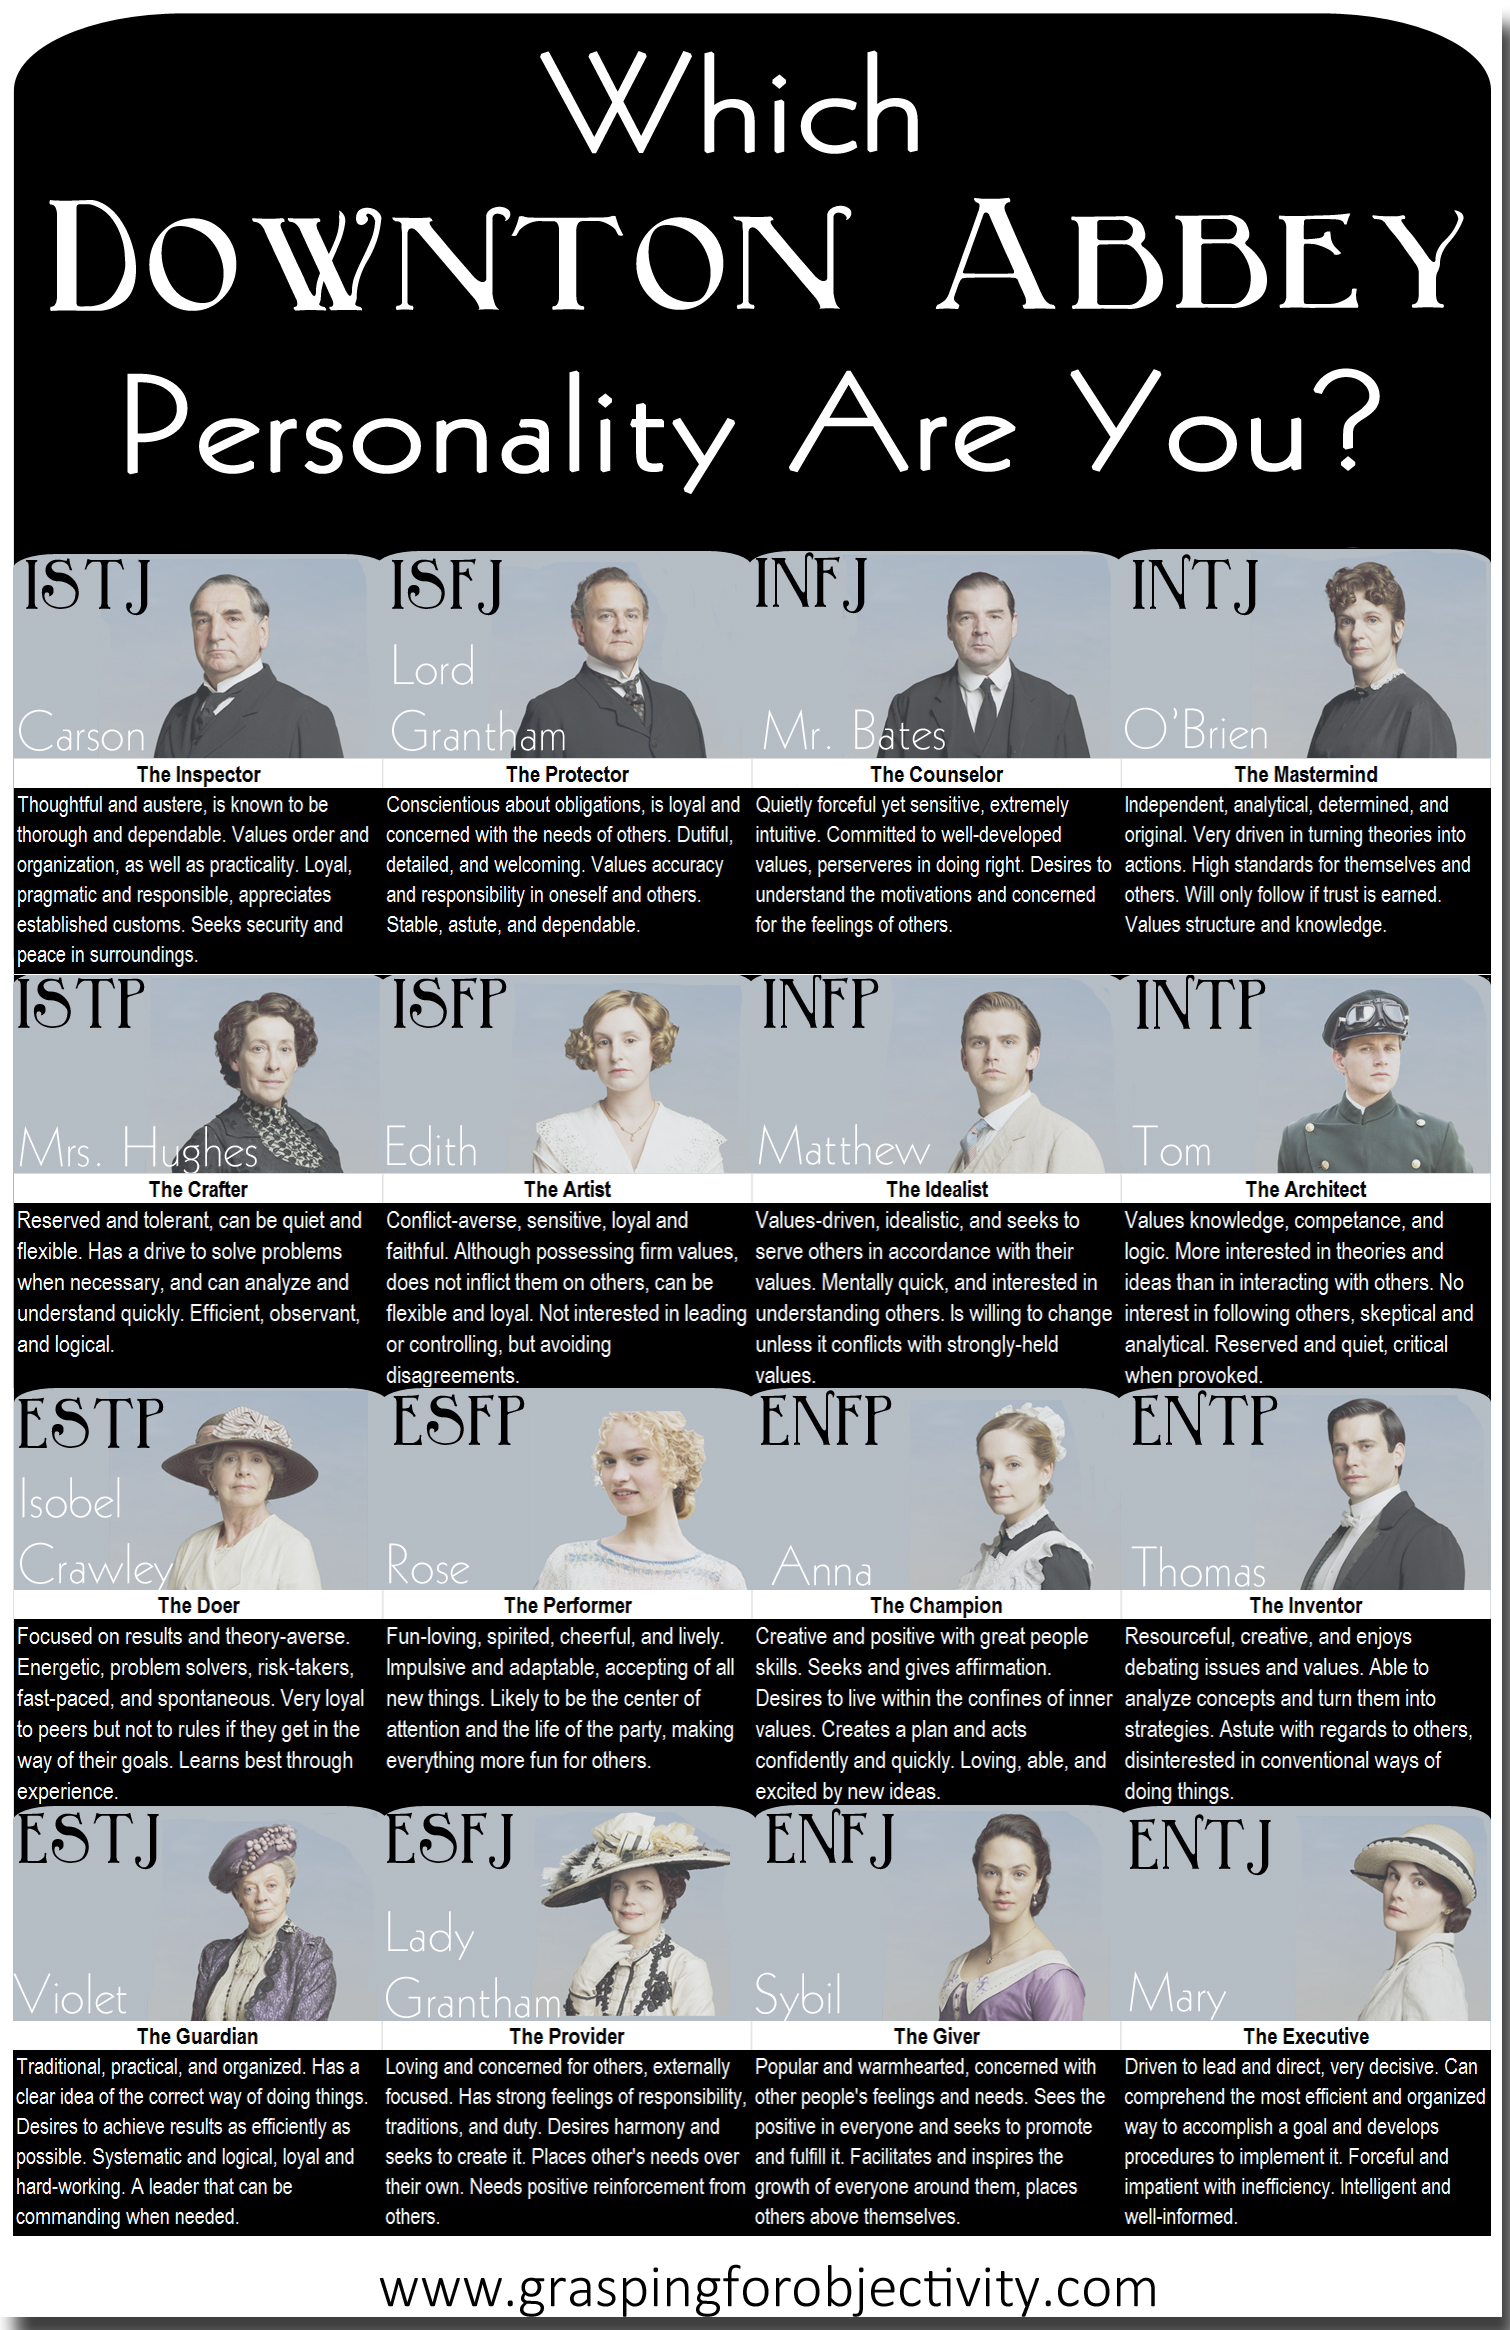 Bria MBTI Personality Type: ENFJ or ENFP?